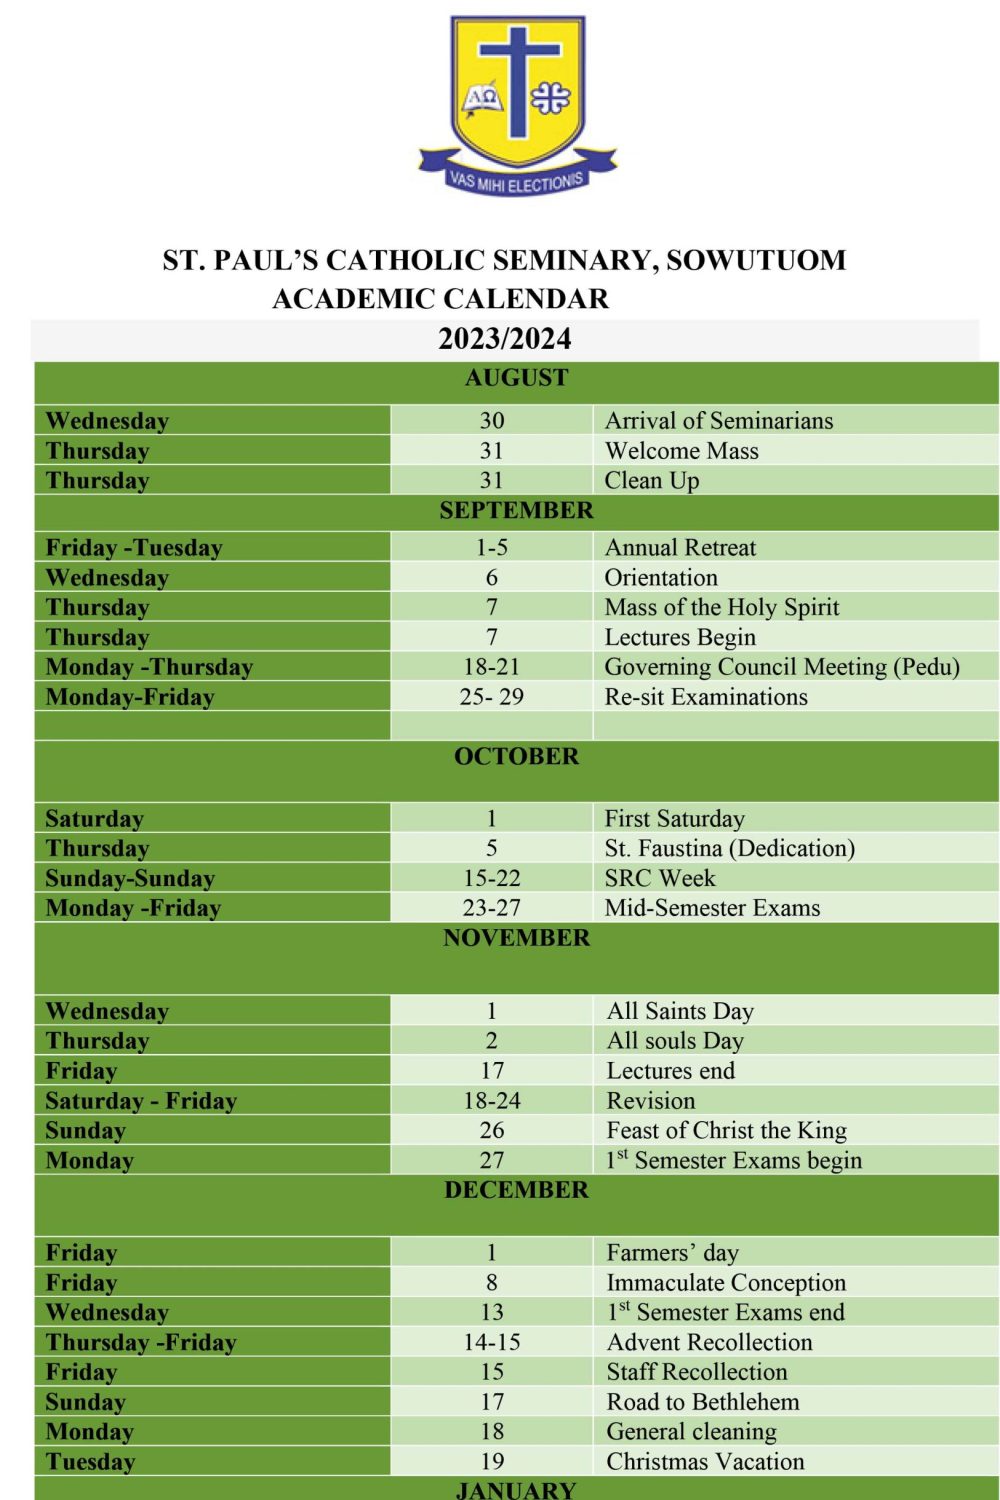 St. Paul's Catholic Seminary Sowutuom - ACADEMIC_CALENDER_2023_2024_1